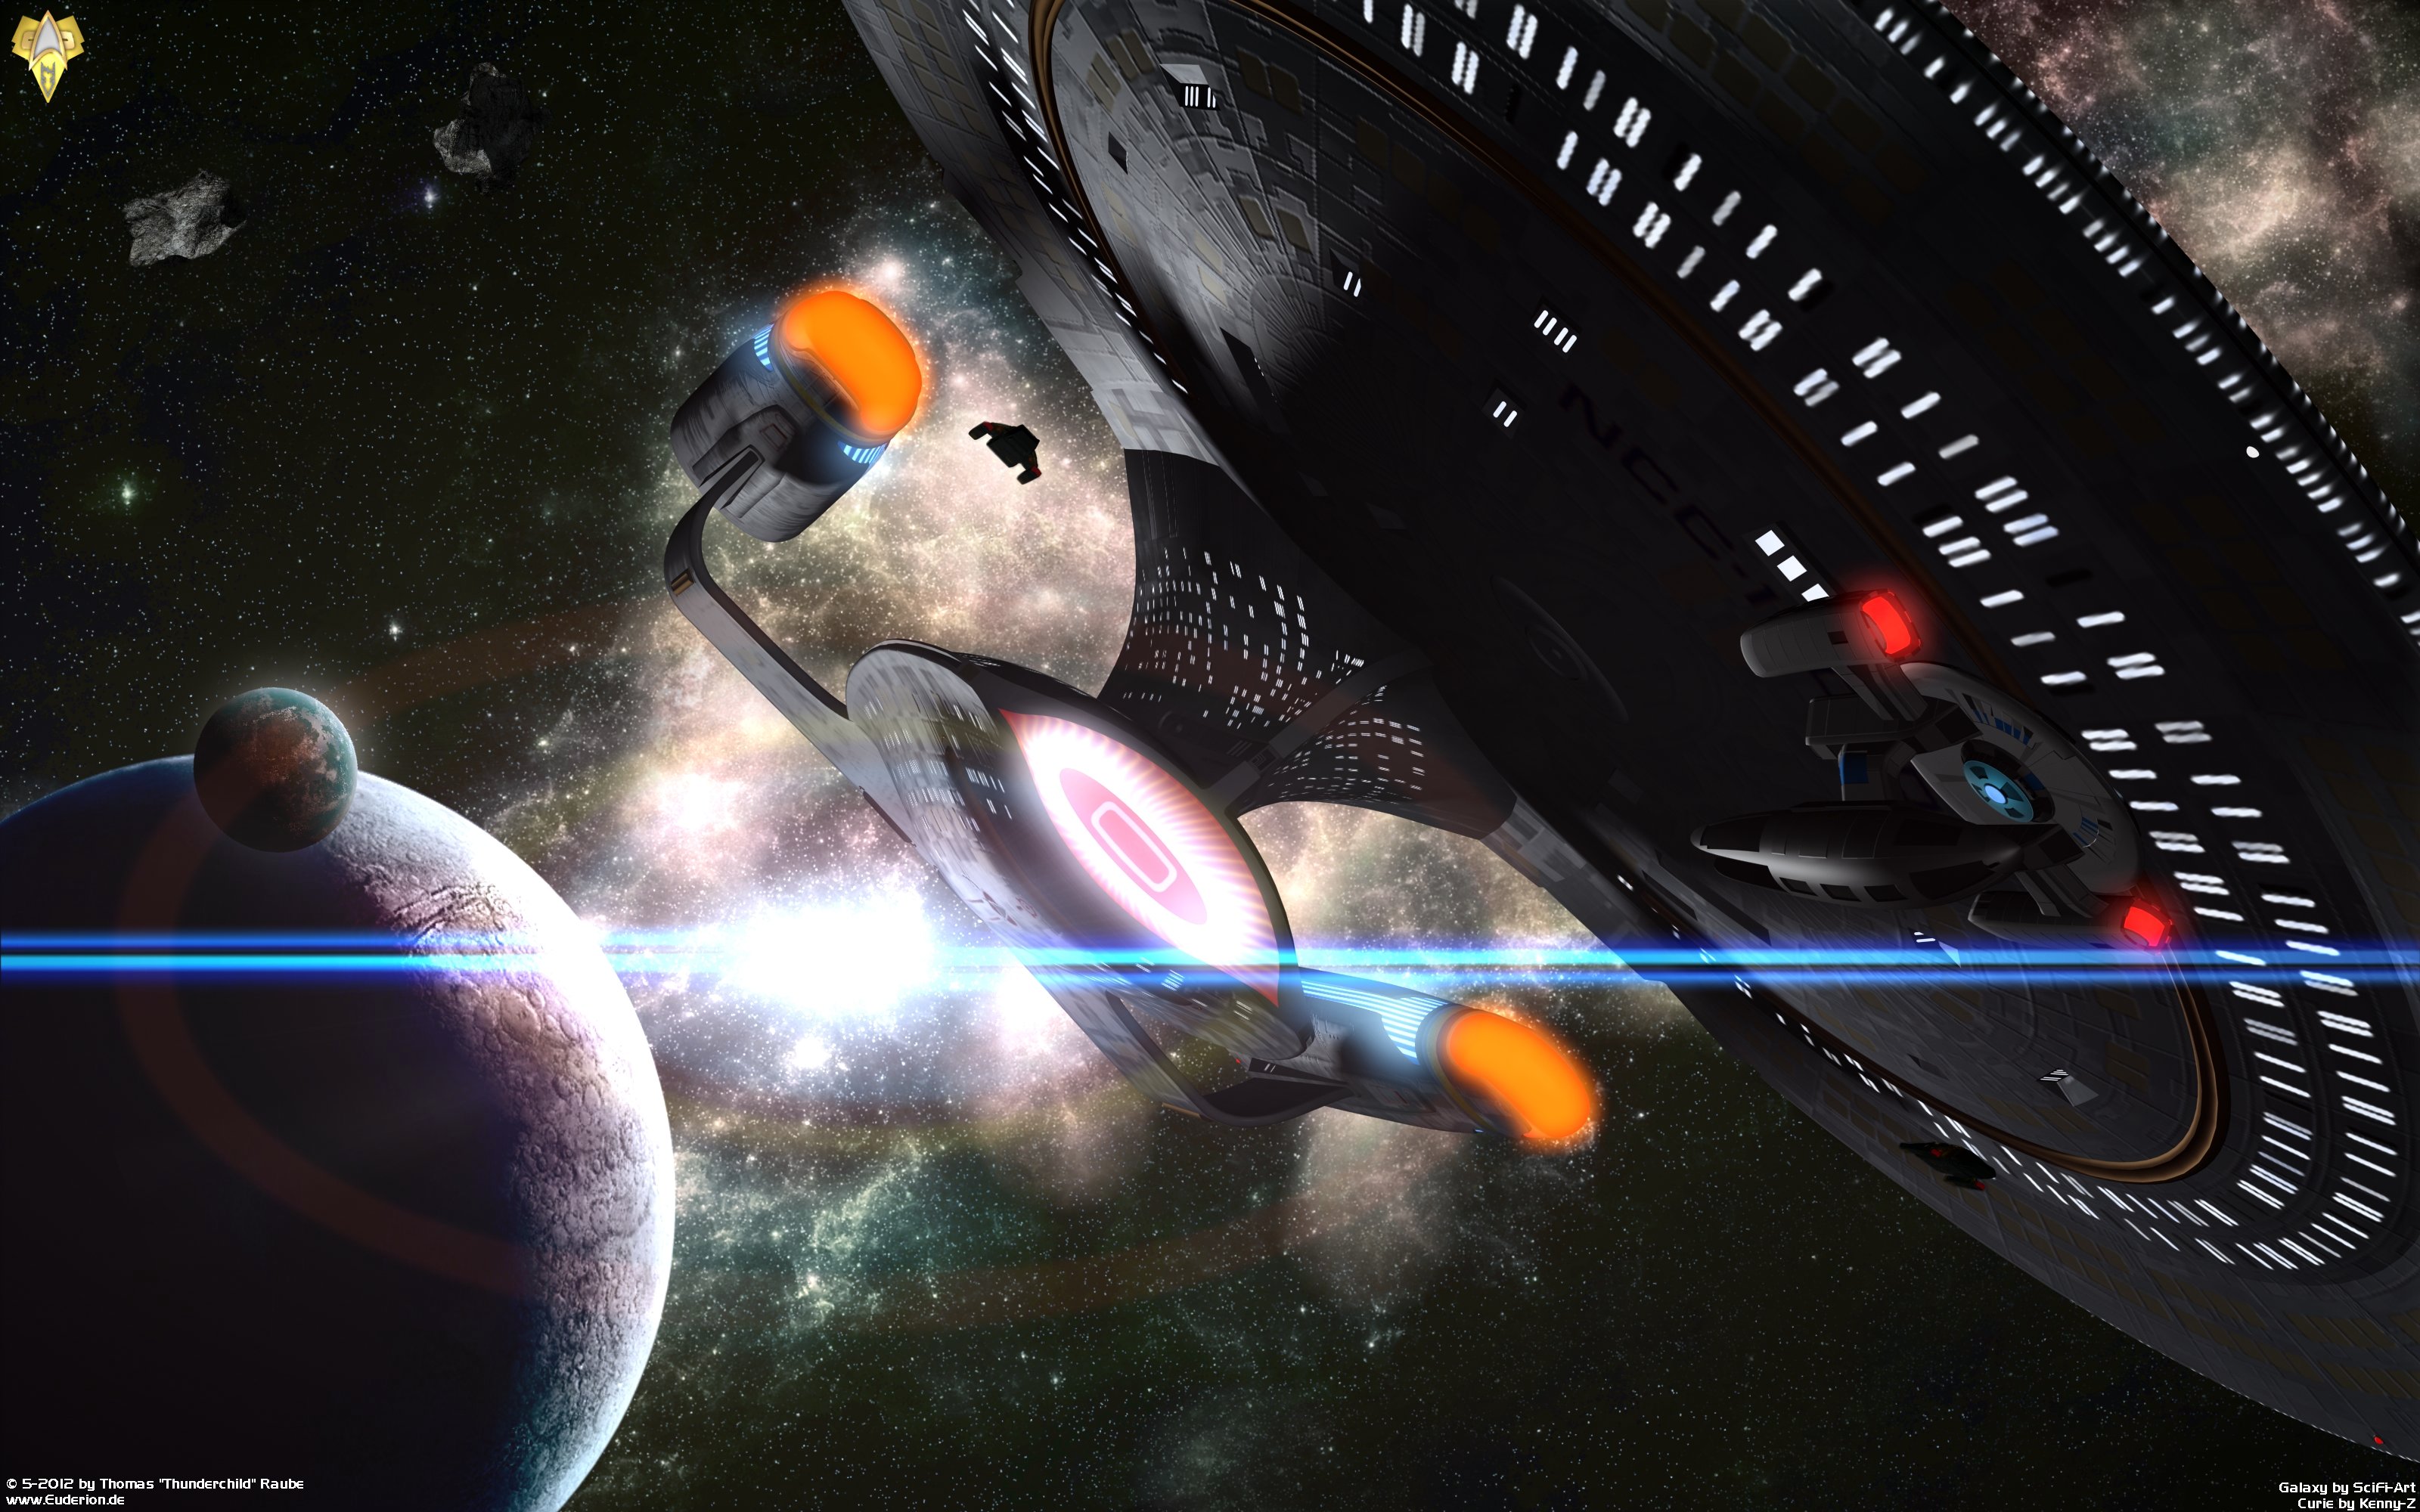 enterprise (star trek), spaceship, starship, tv show, star trek: the original series, sci fi, space, star trek